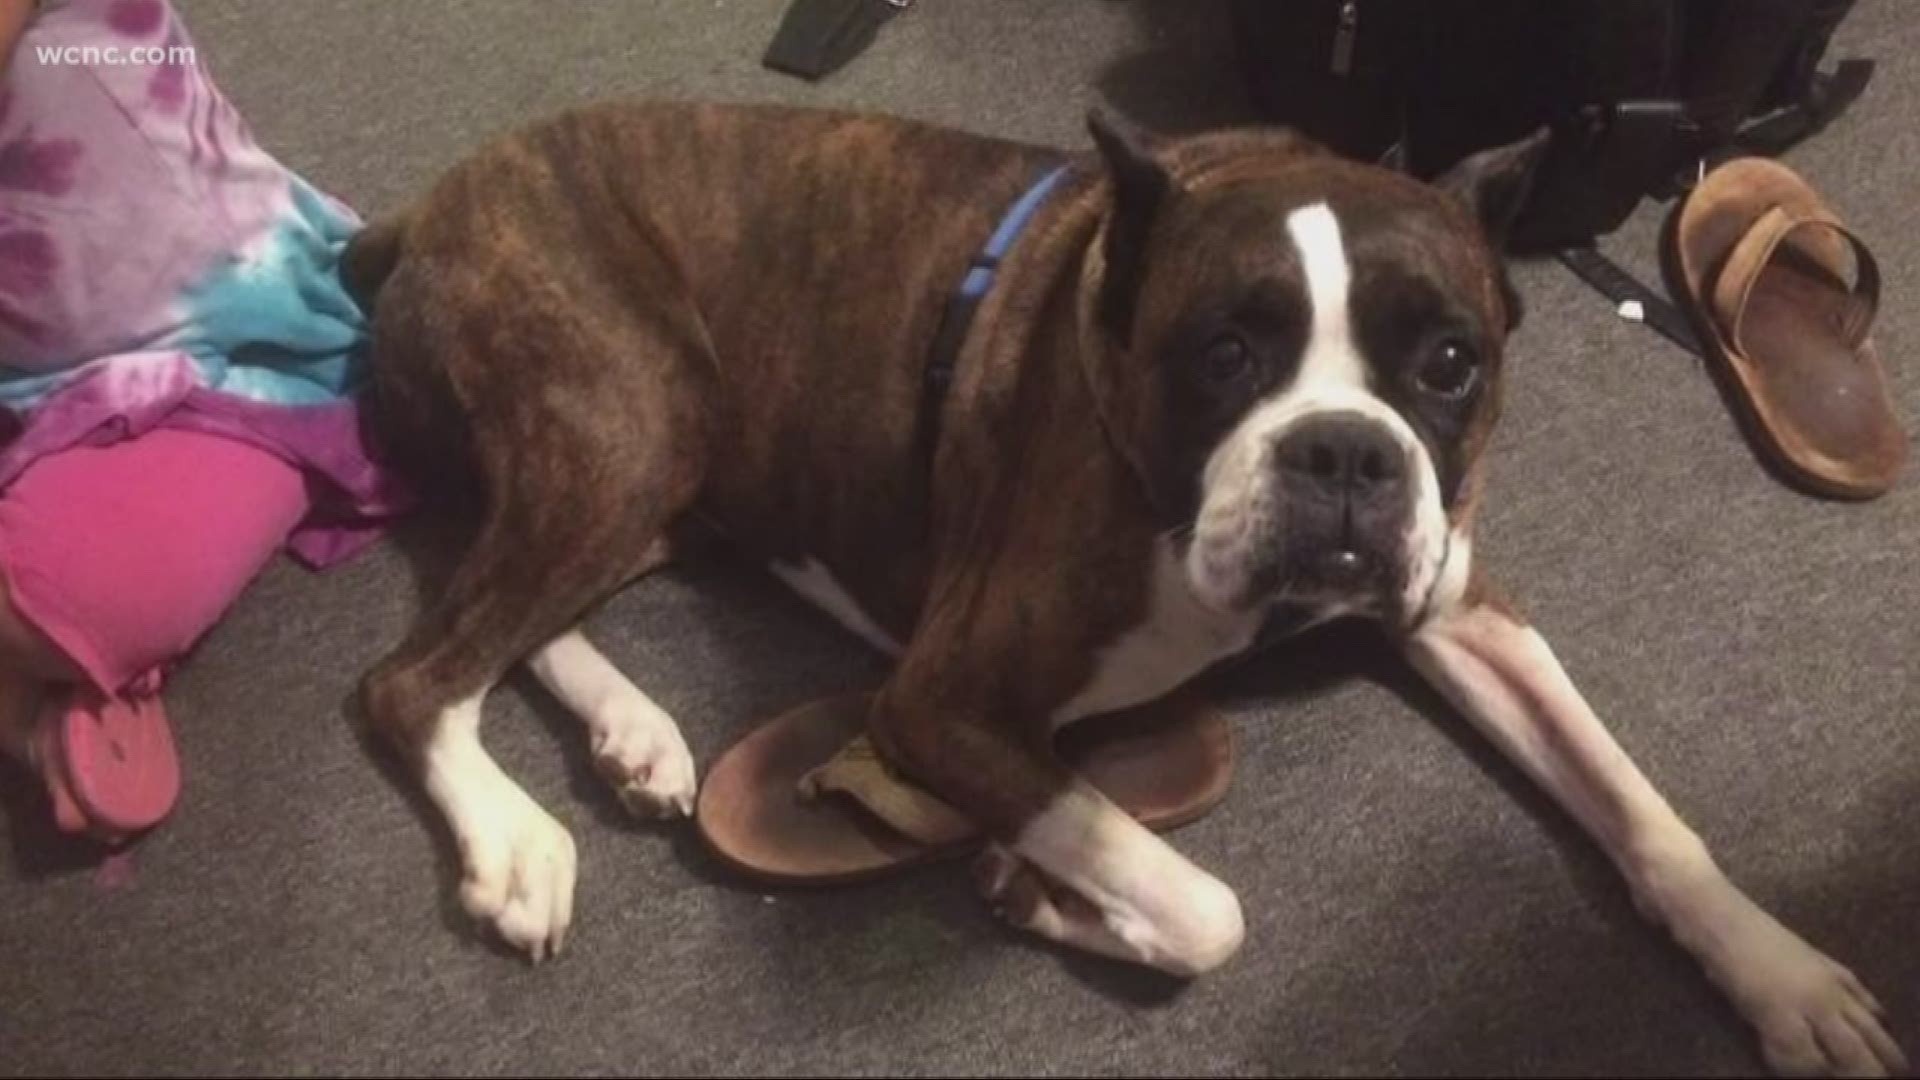 Dog taken during carjacking dies after reuniting with family